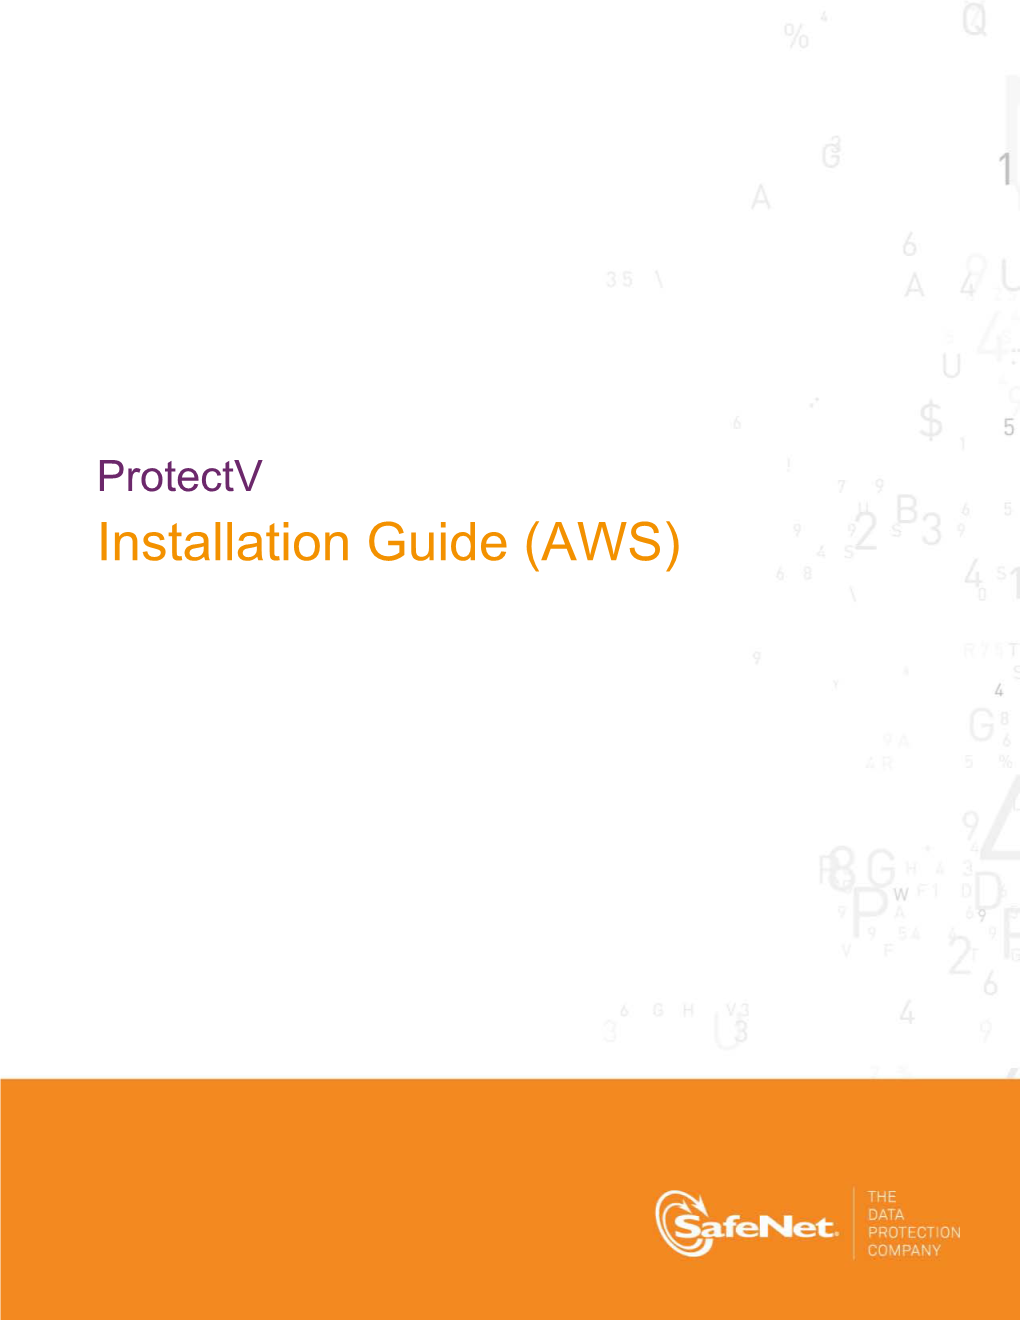 Protectv Installation Guide (AWS)